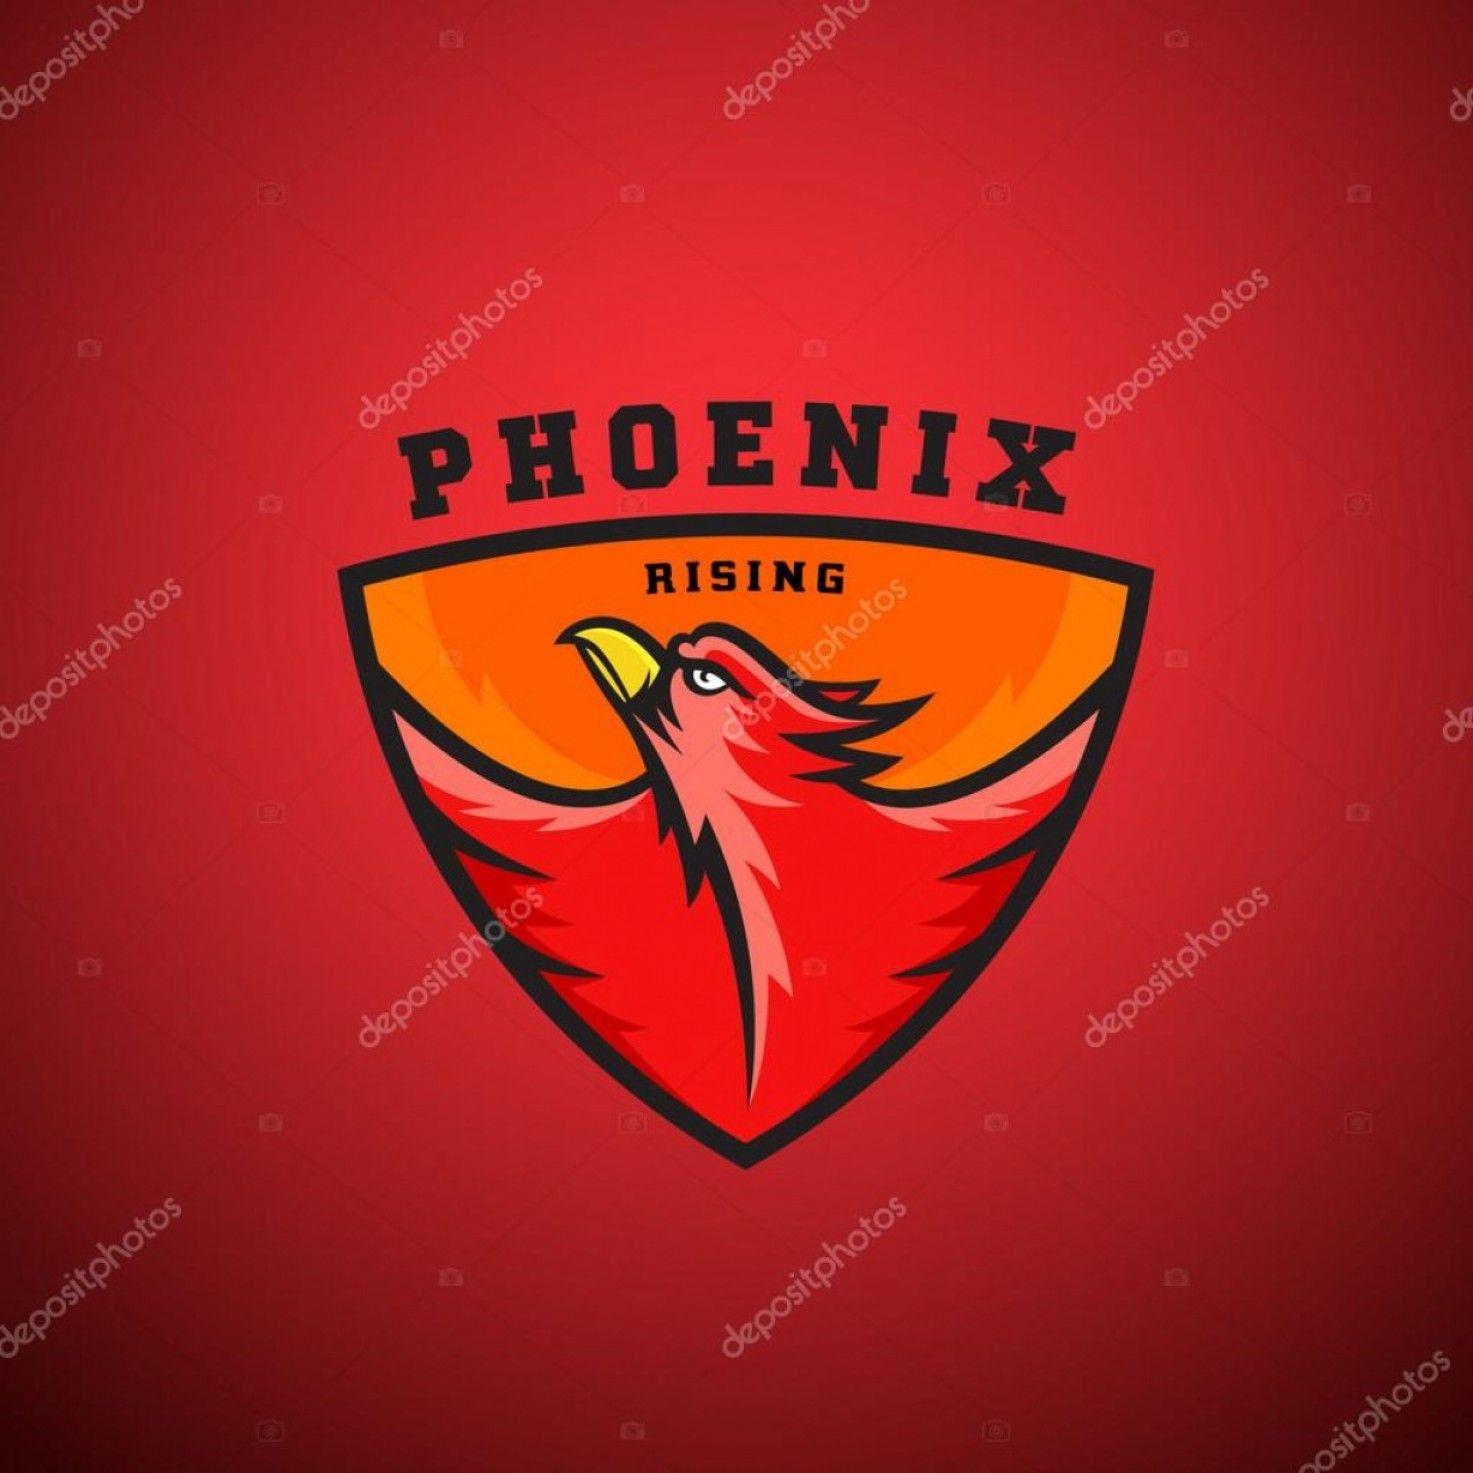 UOPX Logo - University Of Phoenix Logo In Vector Art